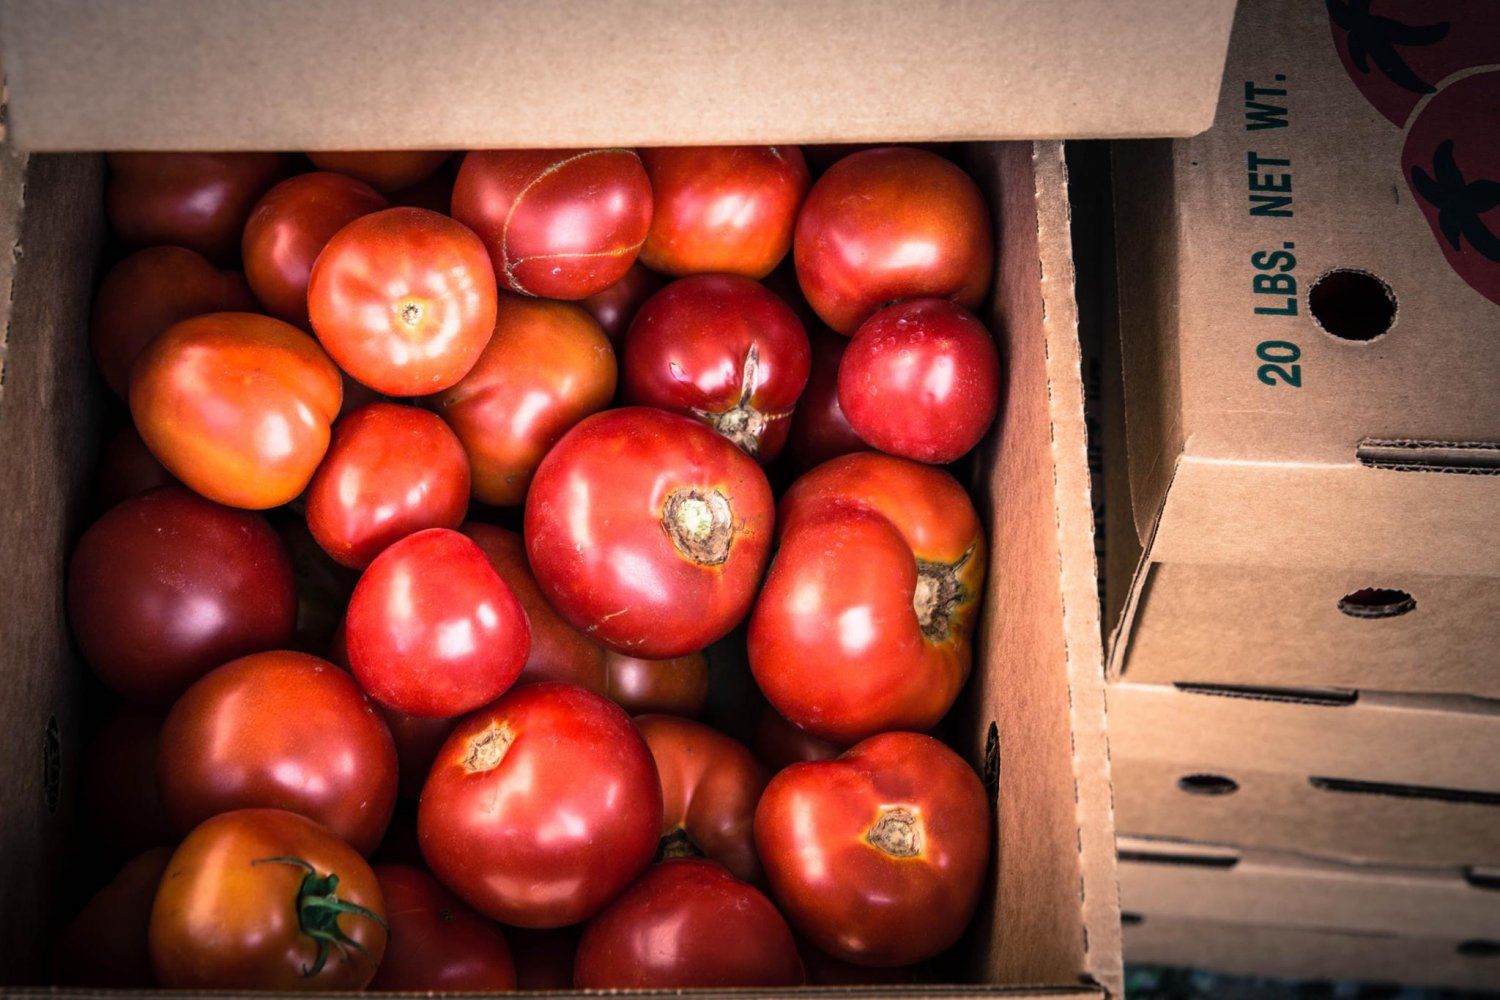 Previous Happening: Bulk Tomato Sale Saturday morning Aug 14, 2021 at Suffield Farm